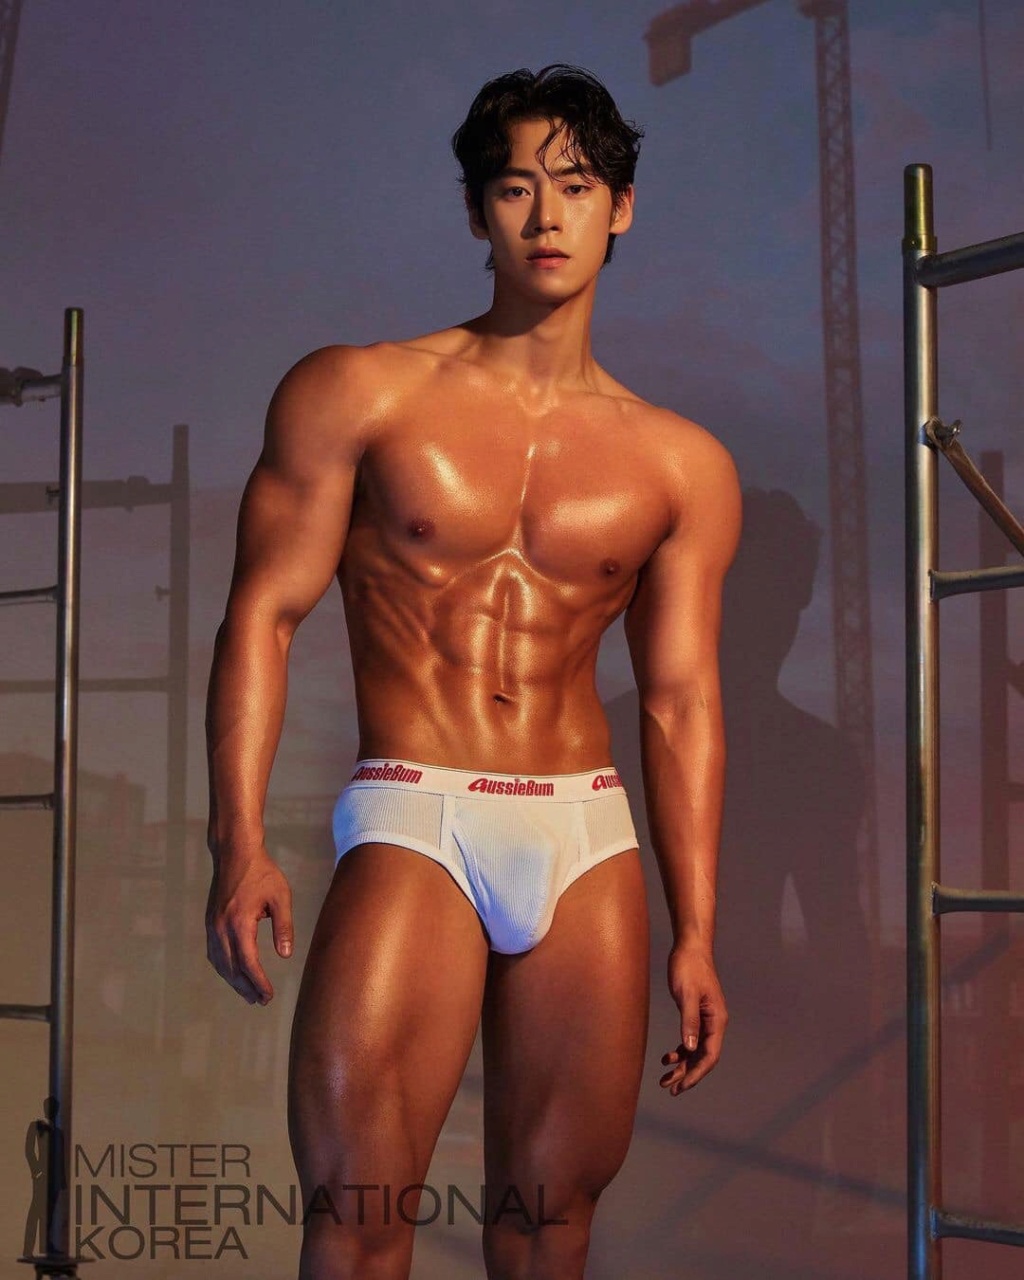 Mister International Korea 2021 - Results!! - Page 2 23993810